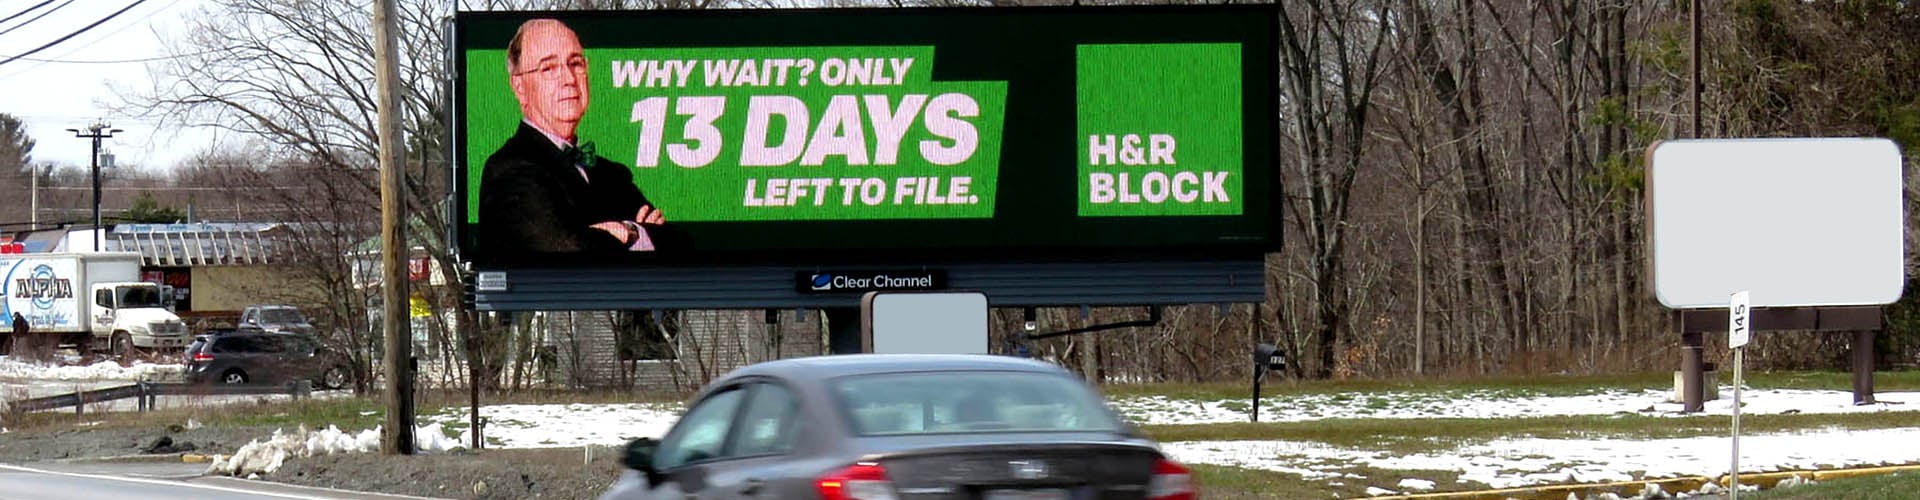 H&R Block Digital Billboard